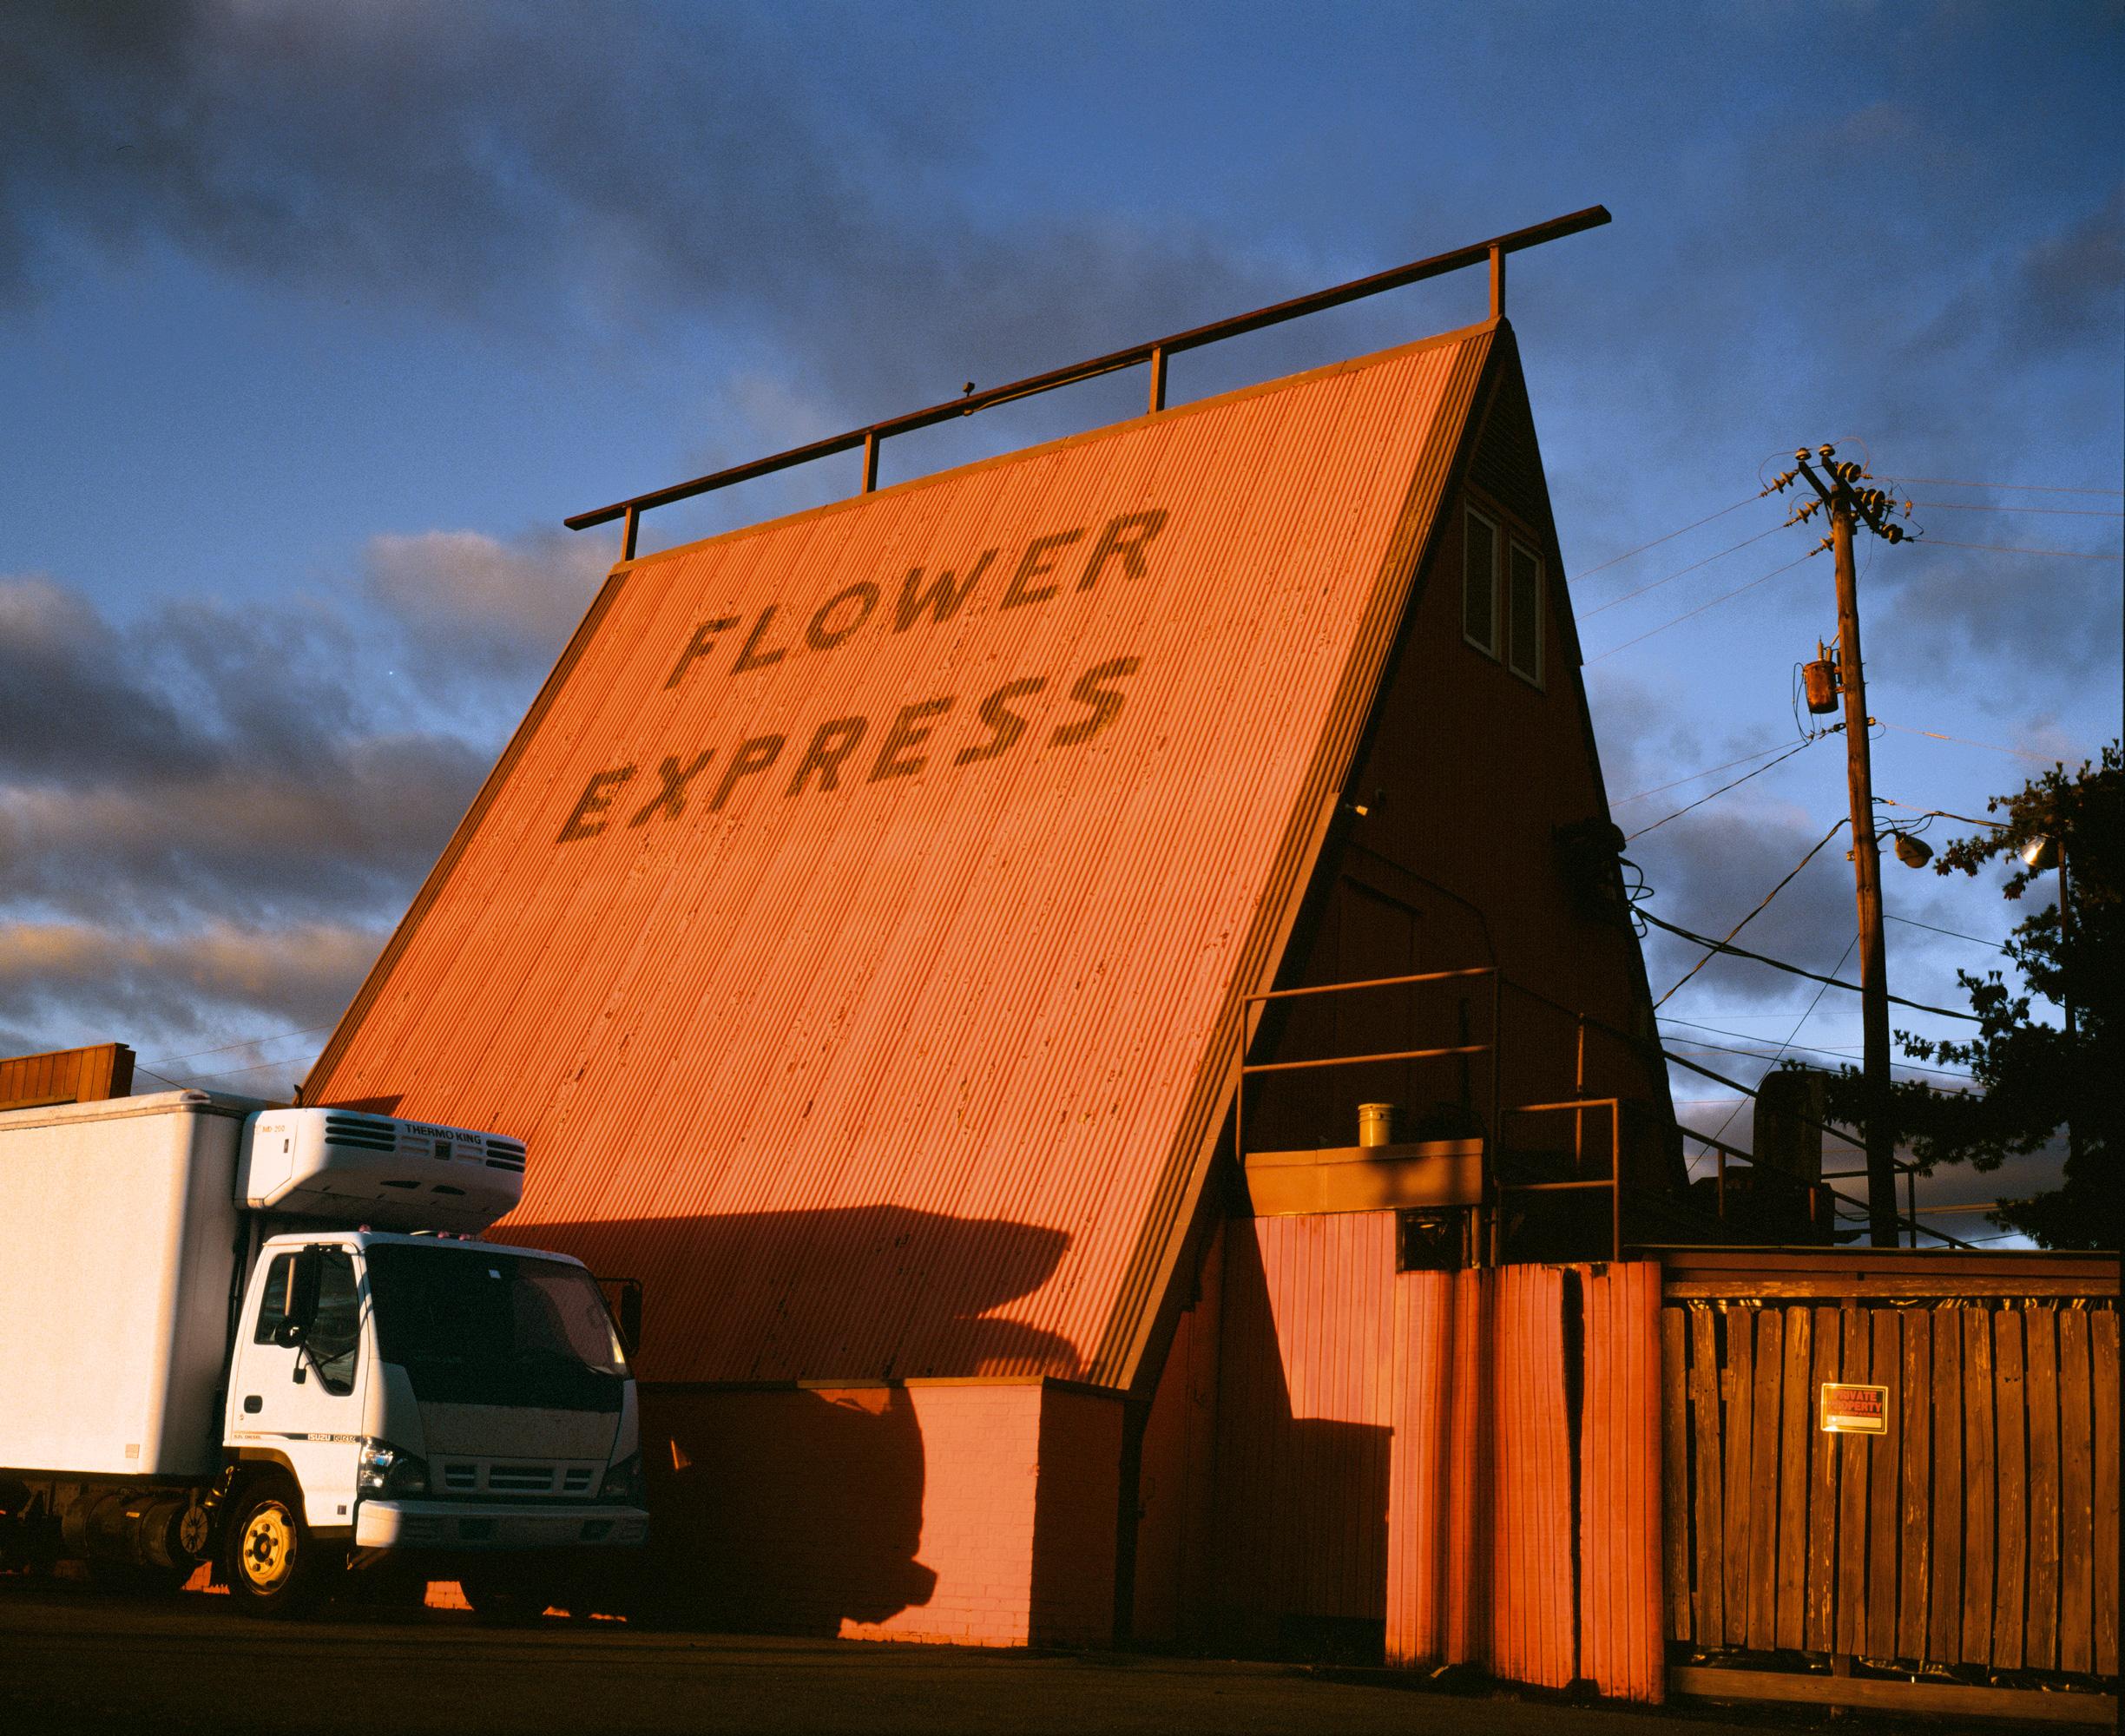 Patrick Sansone, Flower Express, 2022, Impression Lambda C, Ed 1/10, Photographie